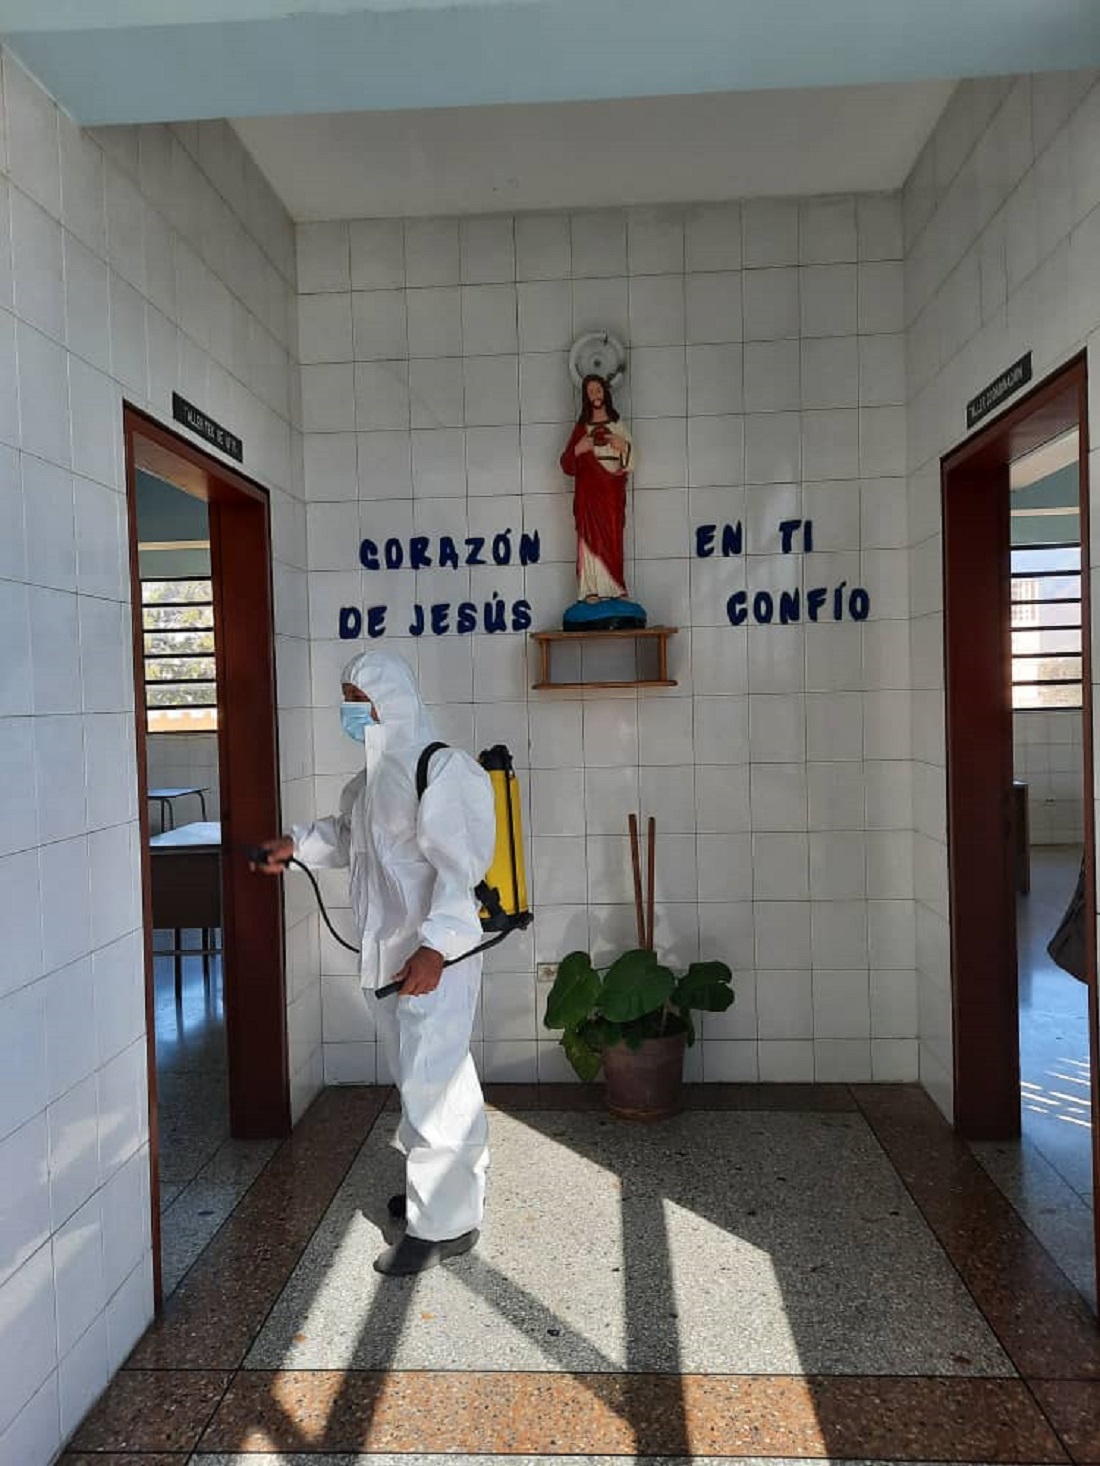 Desinfectan planteles educativos en Naguanagua - Desinfectan planteles educativos en Naguanagua